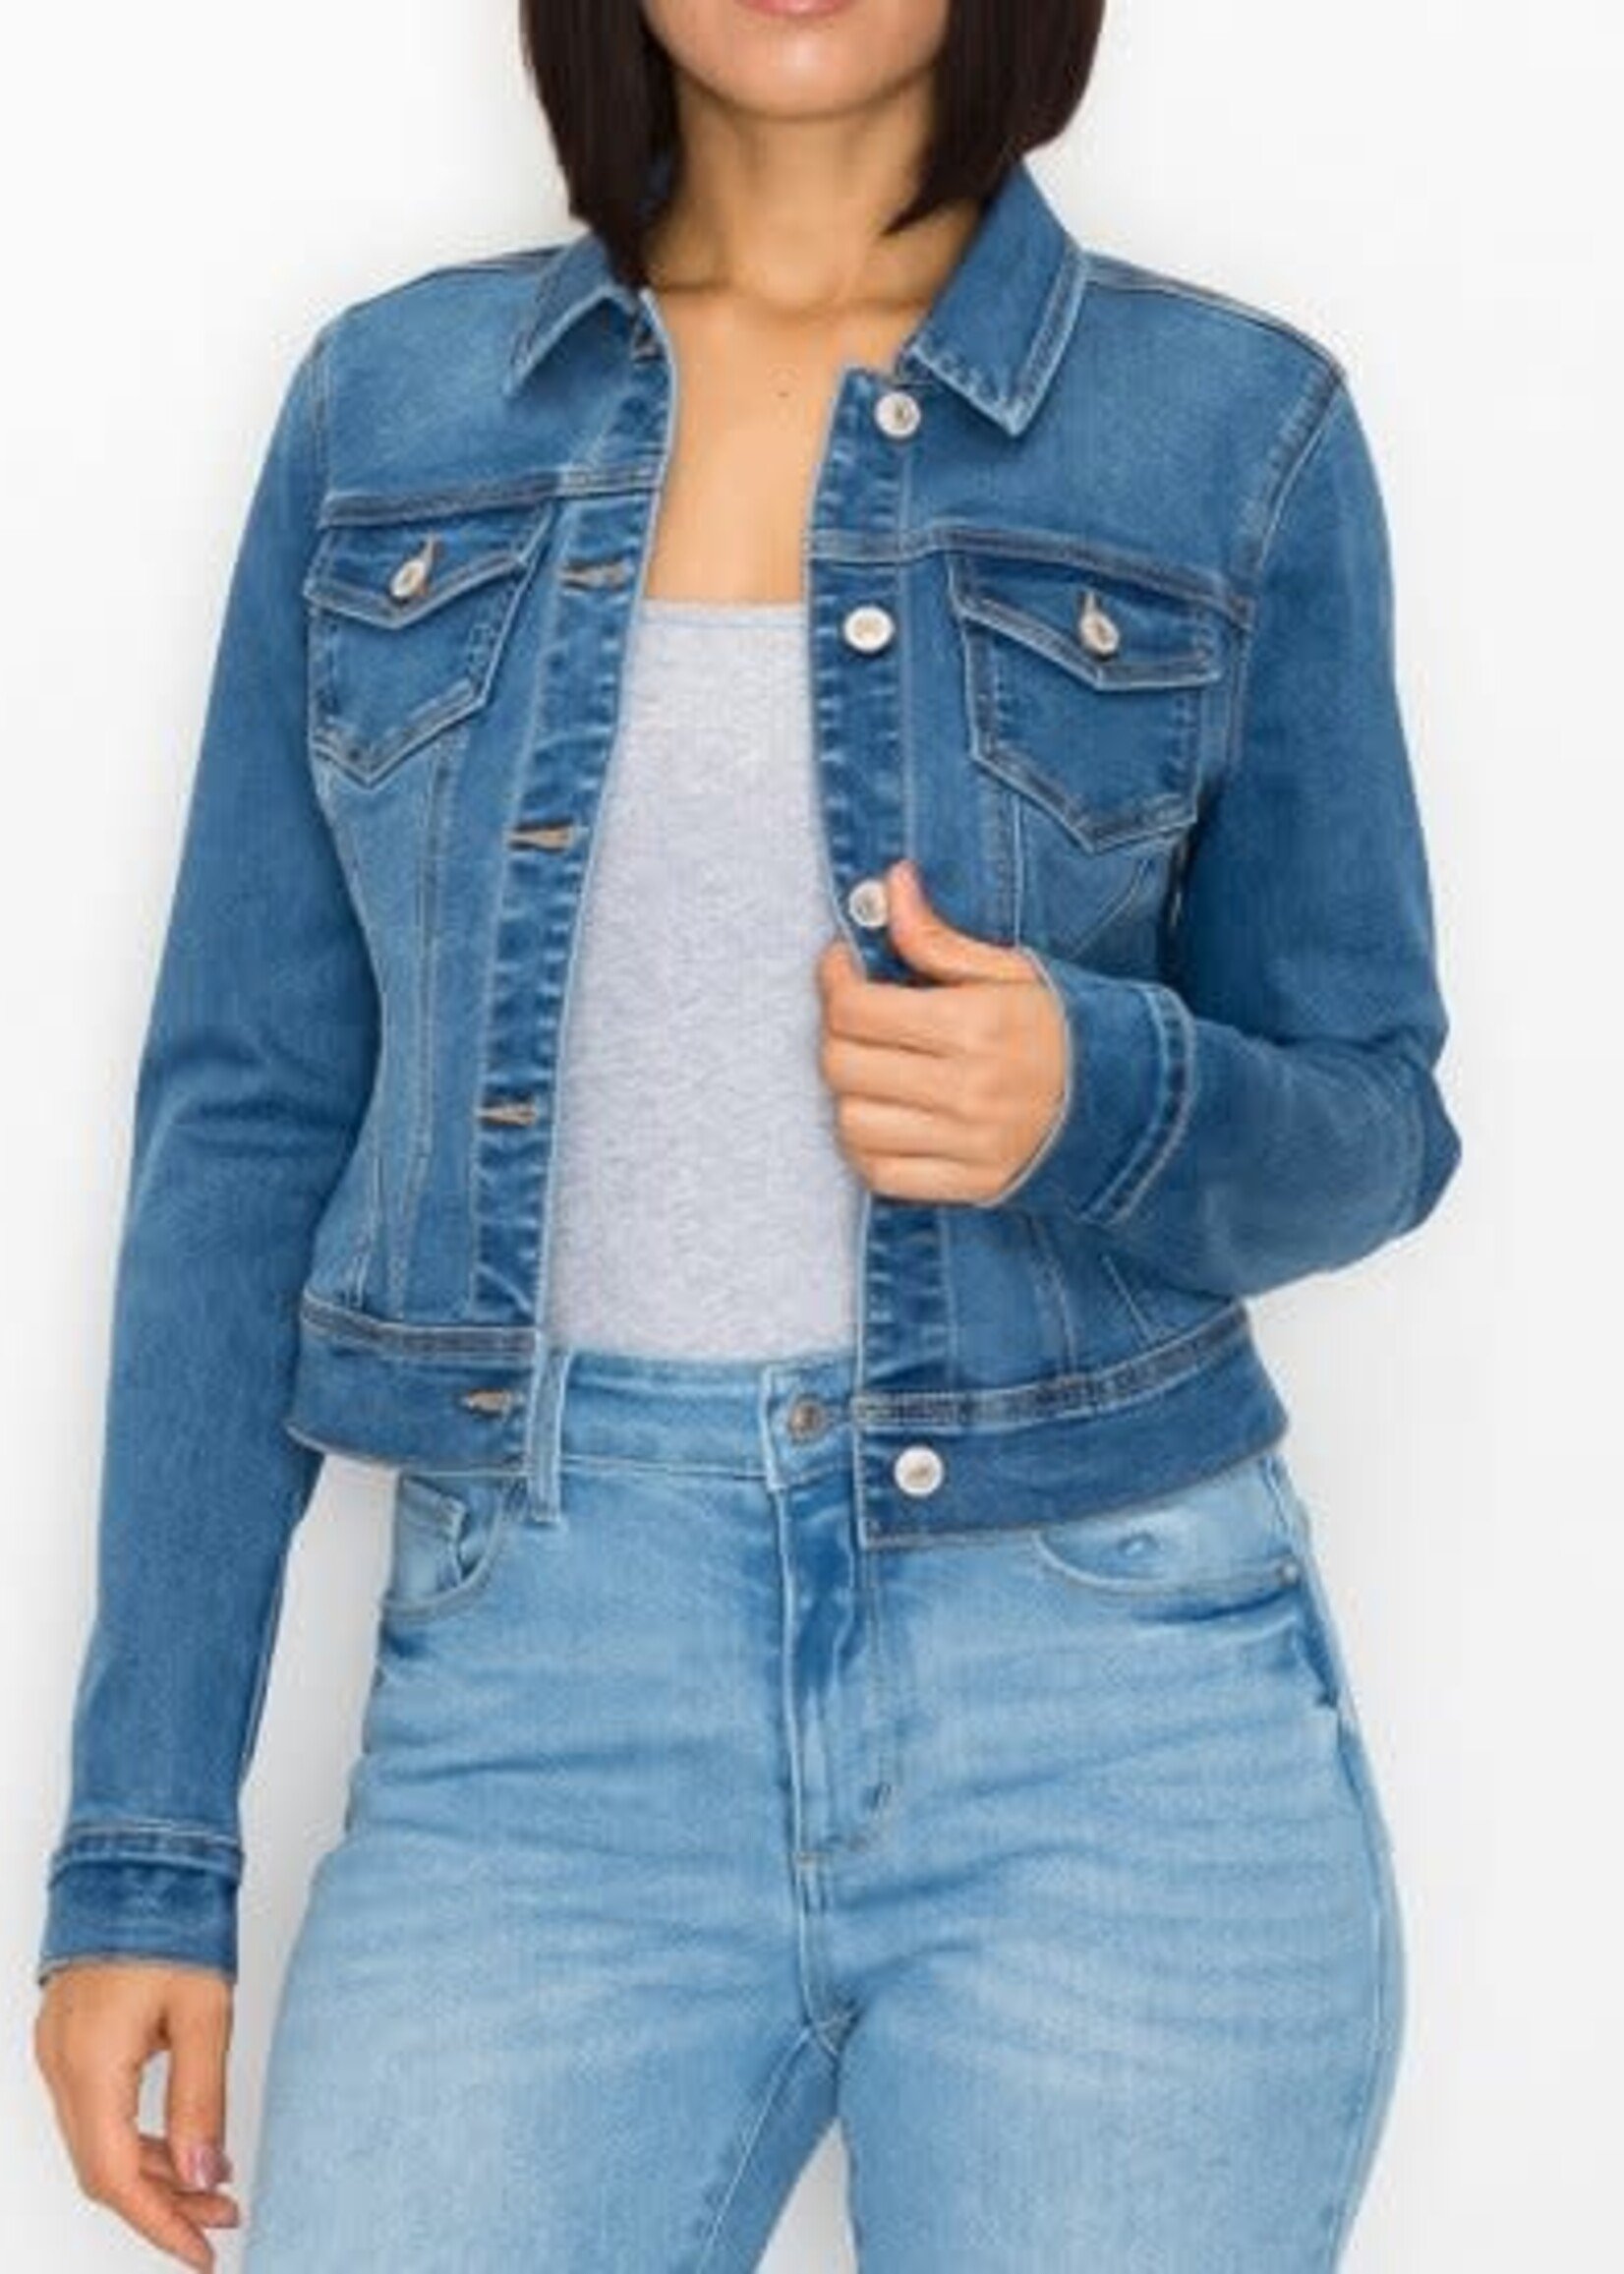 Vintage 80s Jean Jacket Men, Womens Denim Jacket, Light Blue Jacket - Etsy